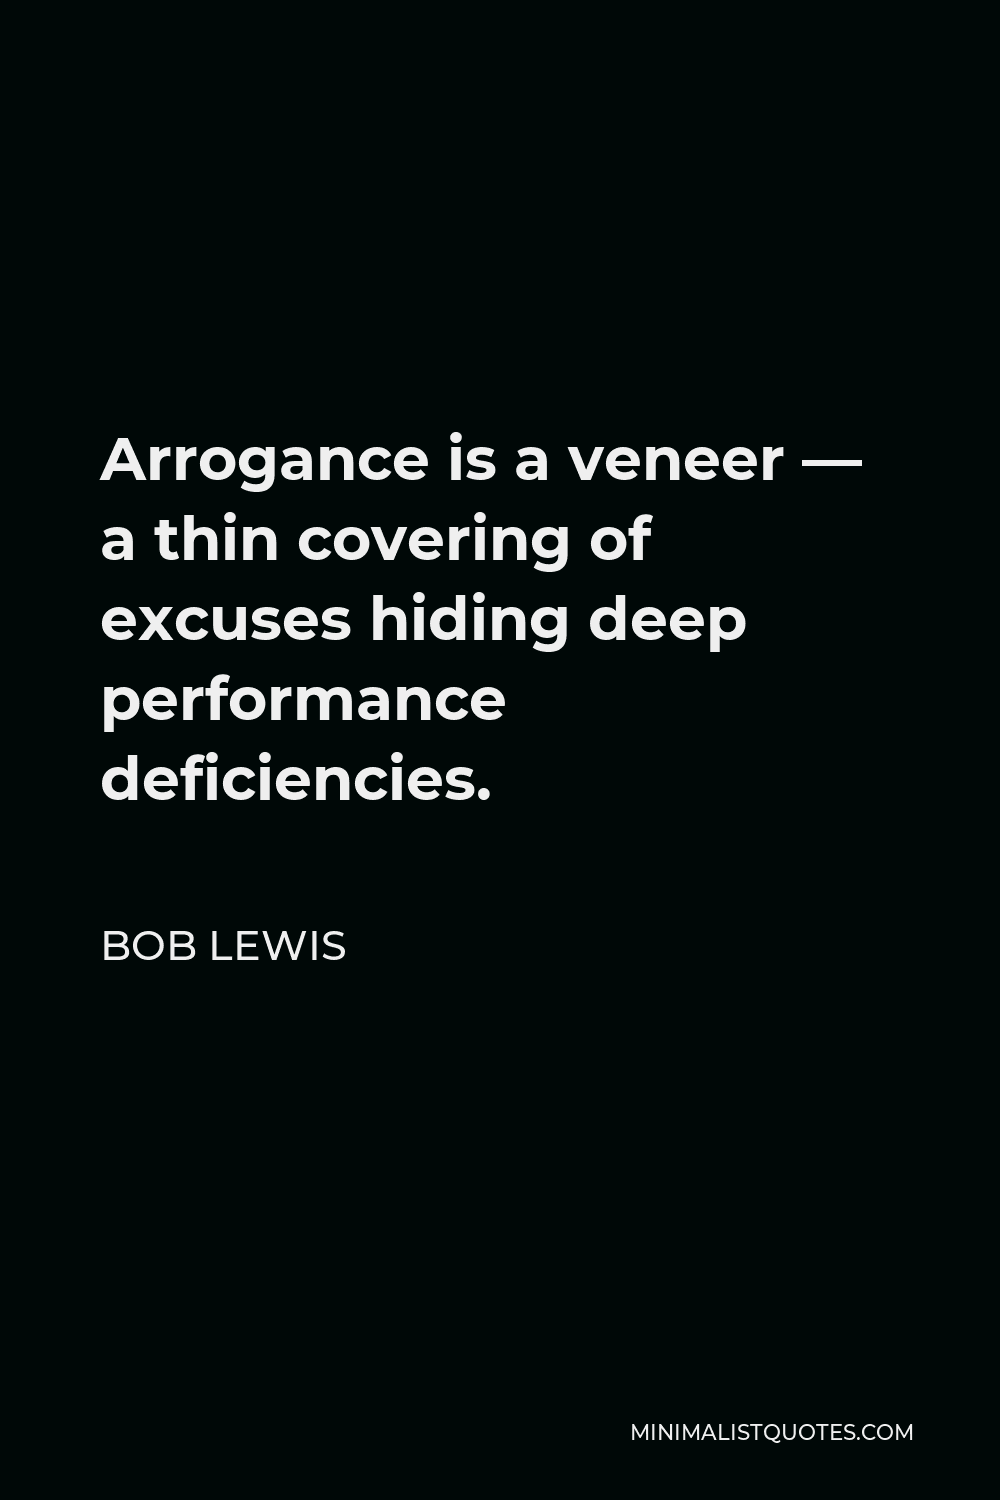 Bob Lewis Quote - Arrogance is a veneer — a thin covering of excuses hiding deep performance deficiencies.